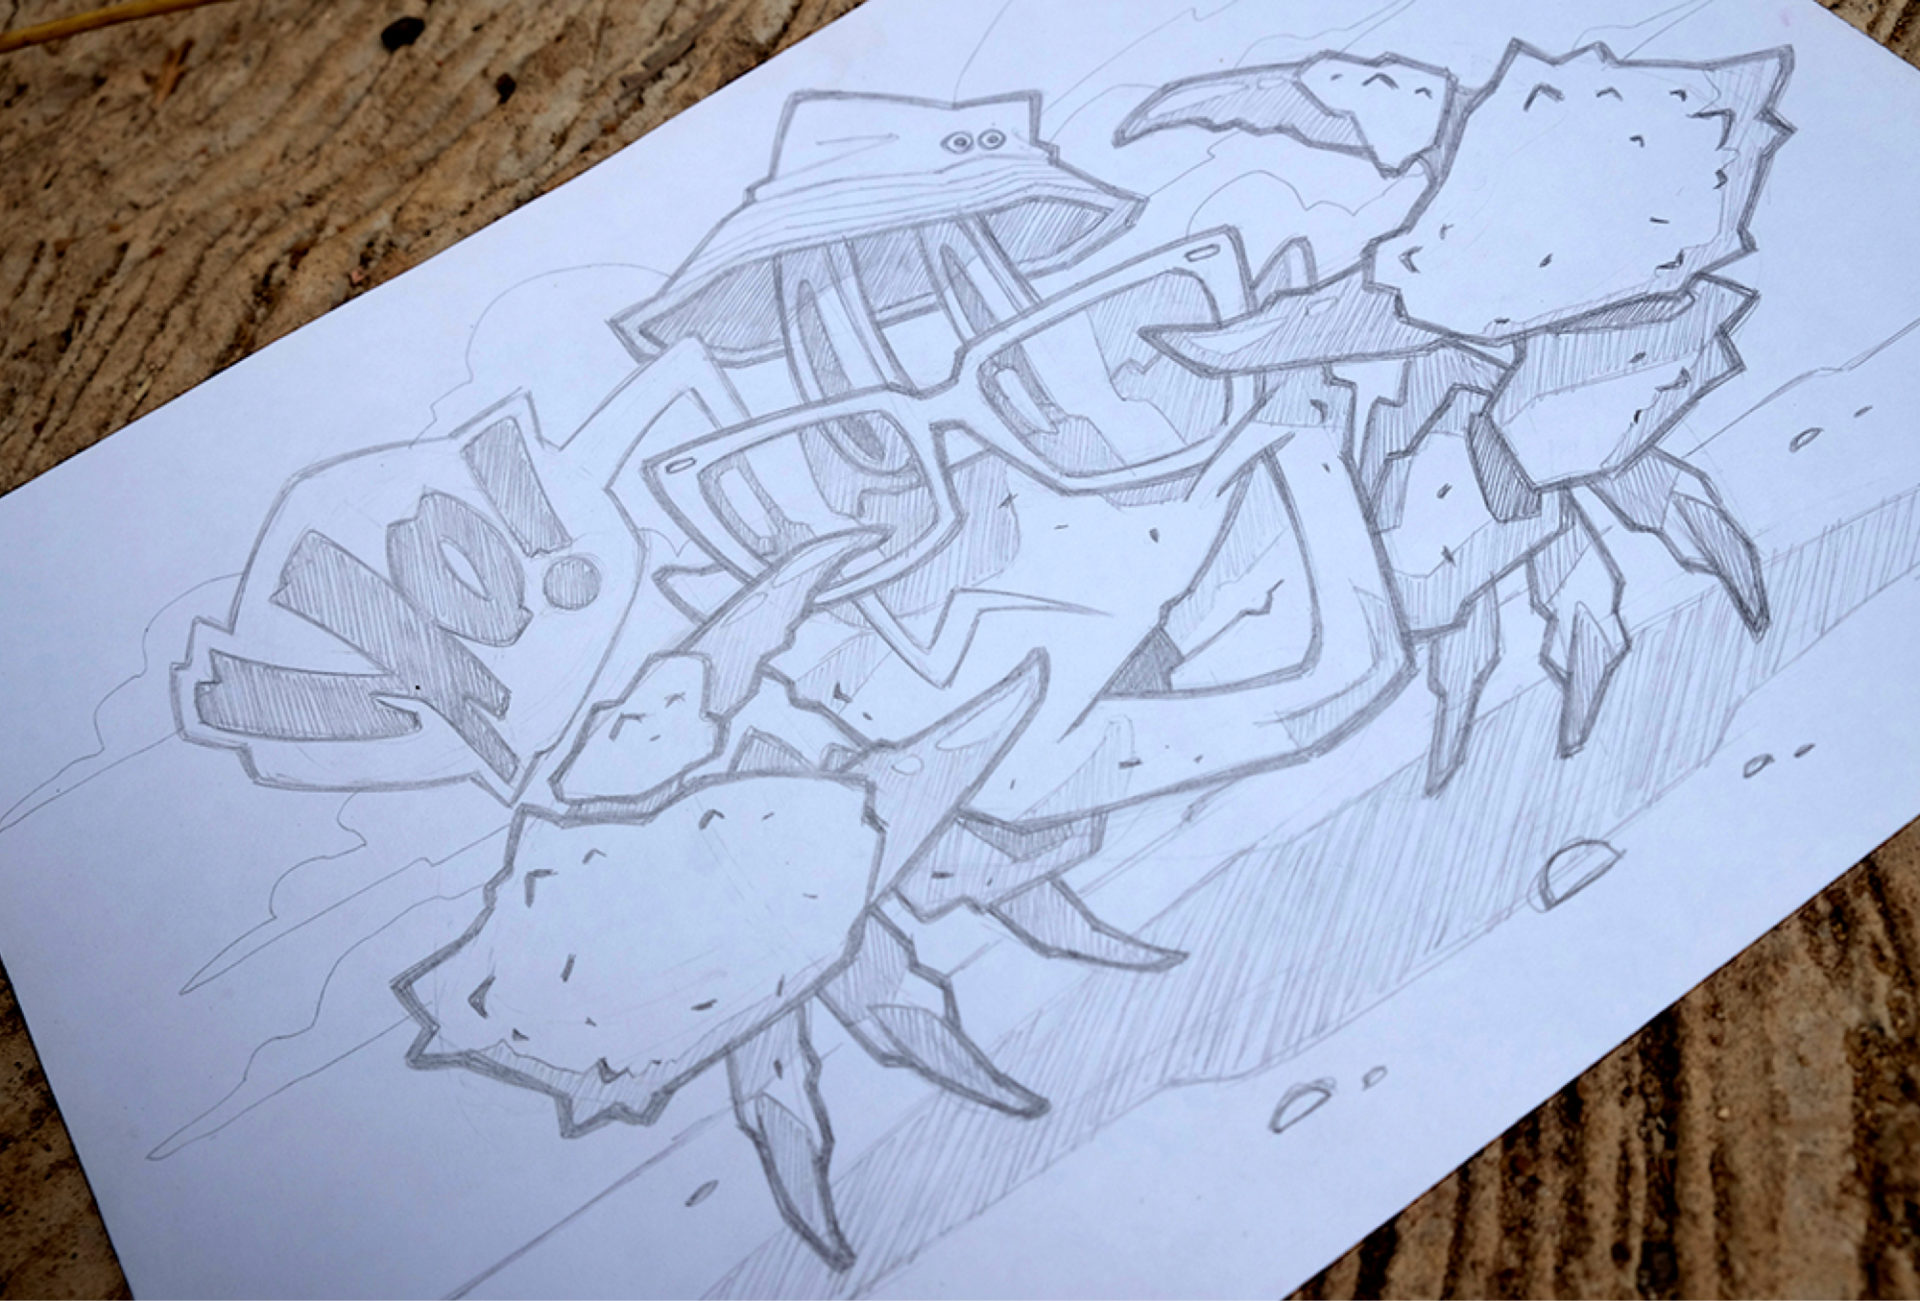 Crab graffiti sketch